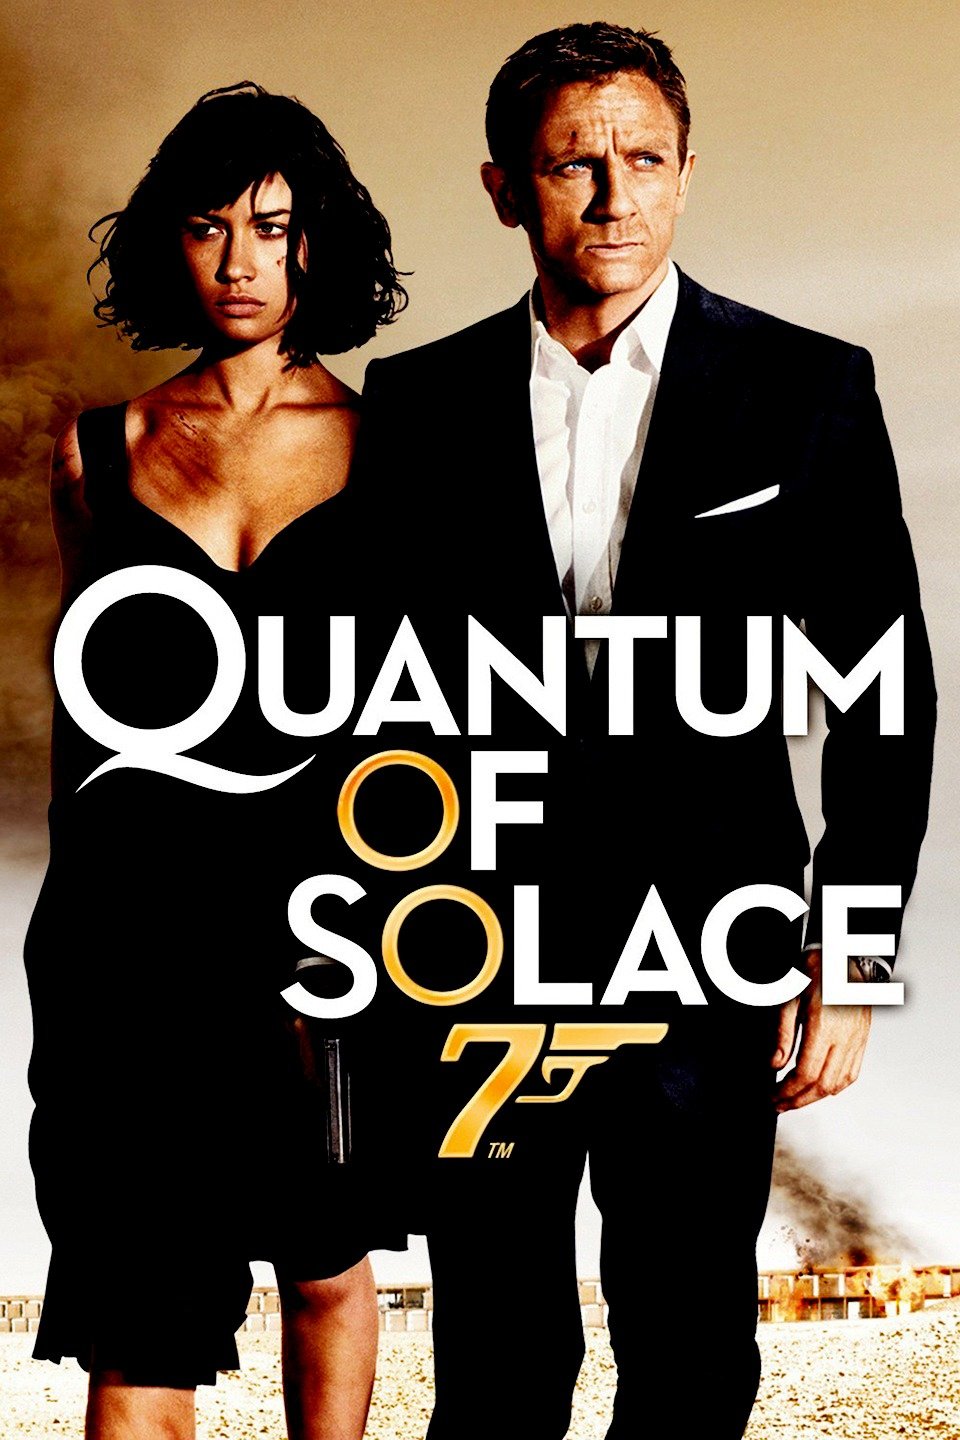 [MINI-HD] James Bond 007 : Quantum of Solace (2008) 007 พยัคฆ์ร้ายเดิมพันระห่ำโลก [1080p] [เสียงไทย DTS + เสียงอังกฤษ AAC] [THAIDTS.x264.BDMASTER] [เสียงไทย + บรรยายไทย] [ONE2UP]